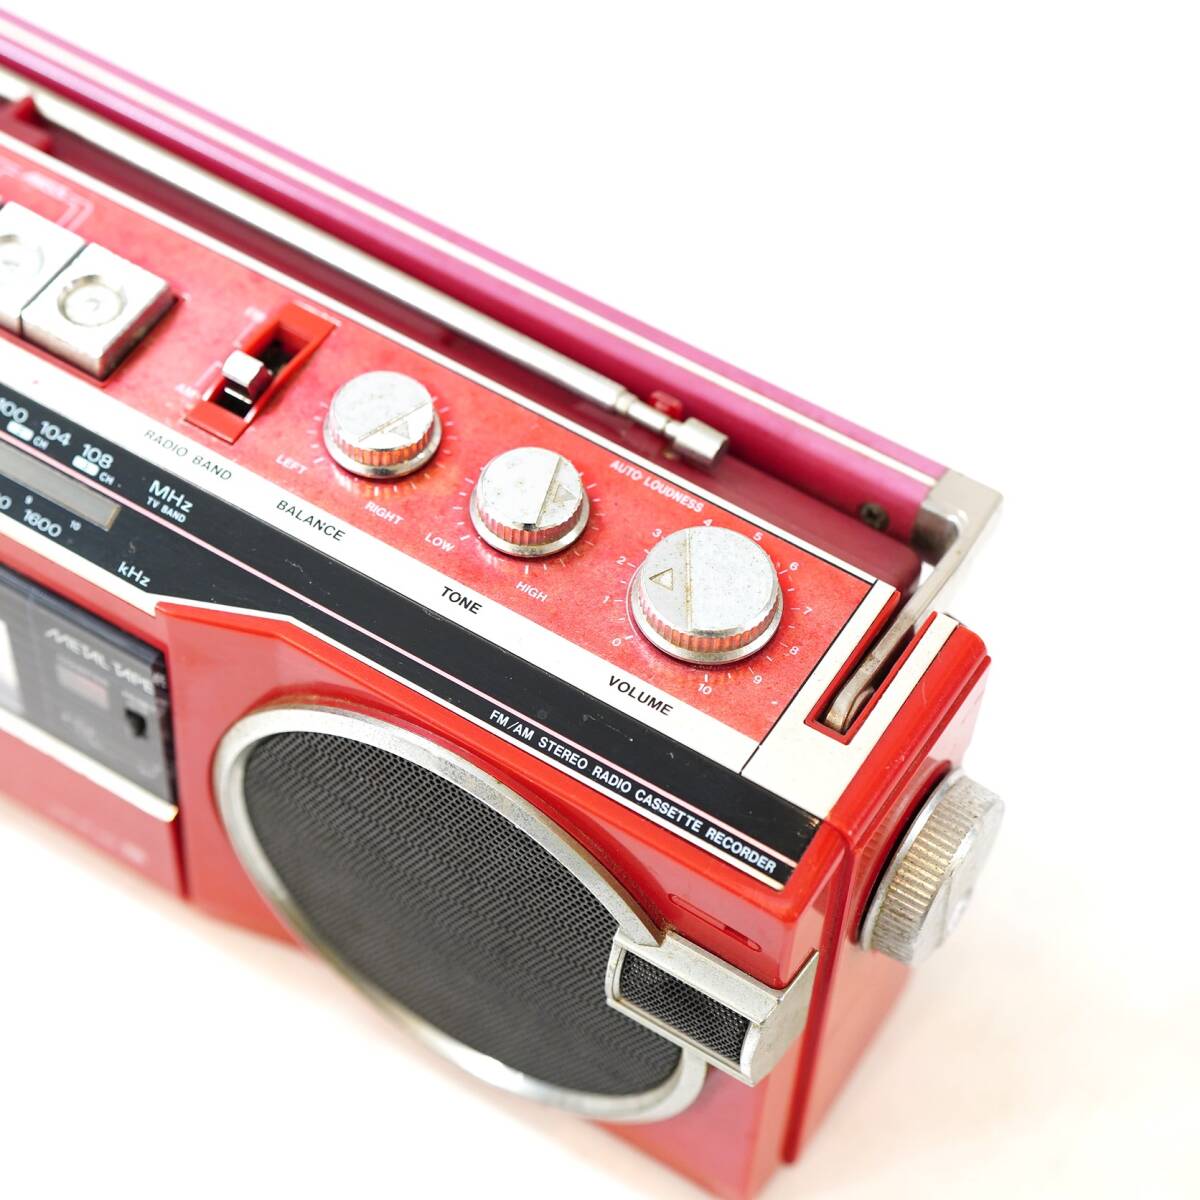 NA4852 ラジオ受信〇 テープ再生× 簡易クリーニング済 SANYO サンヨー 小型ラジカセ 赤 レッド MR-U4SF 昭和レトロ レトロ 検S_画像4